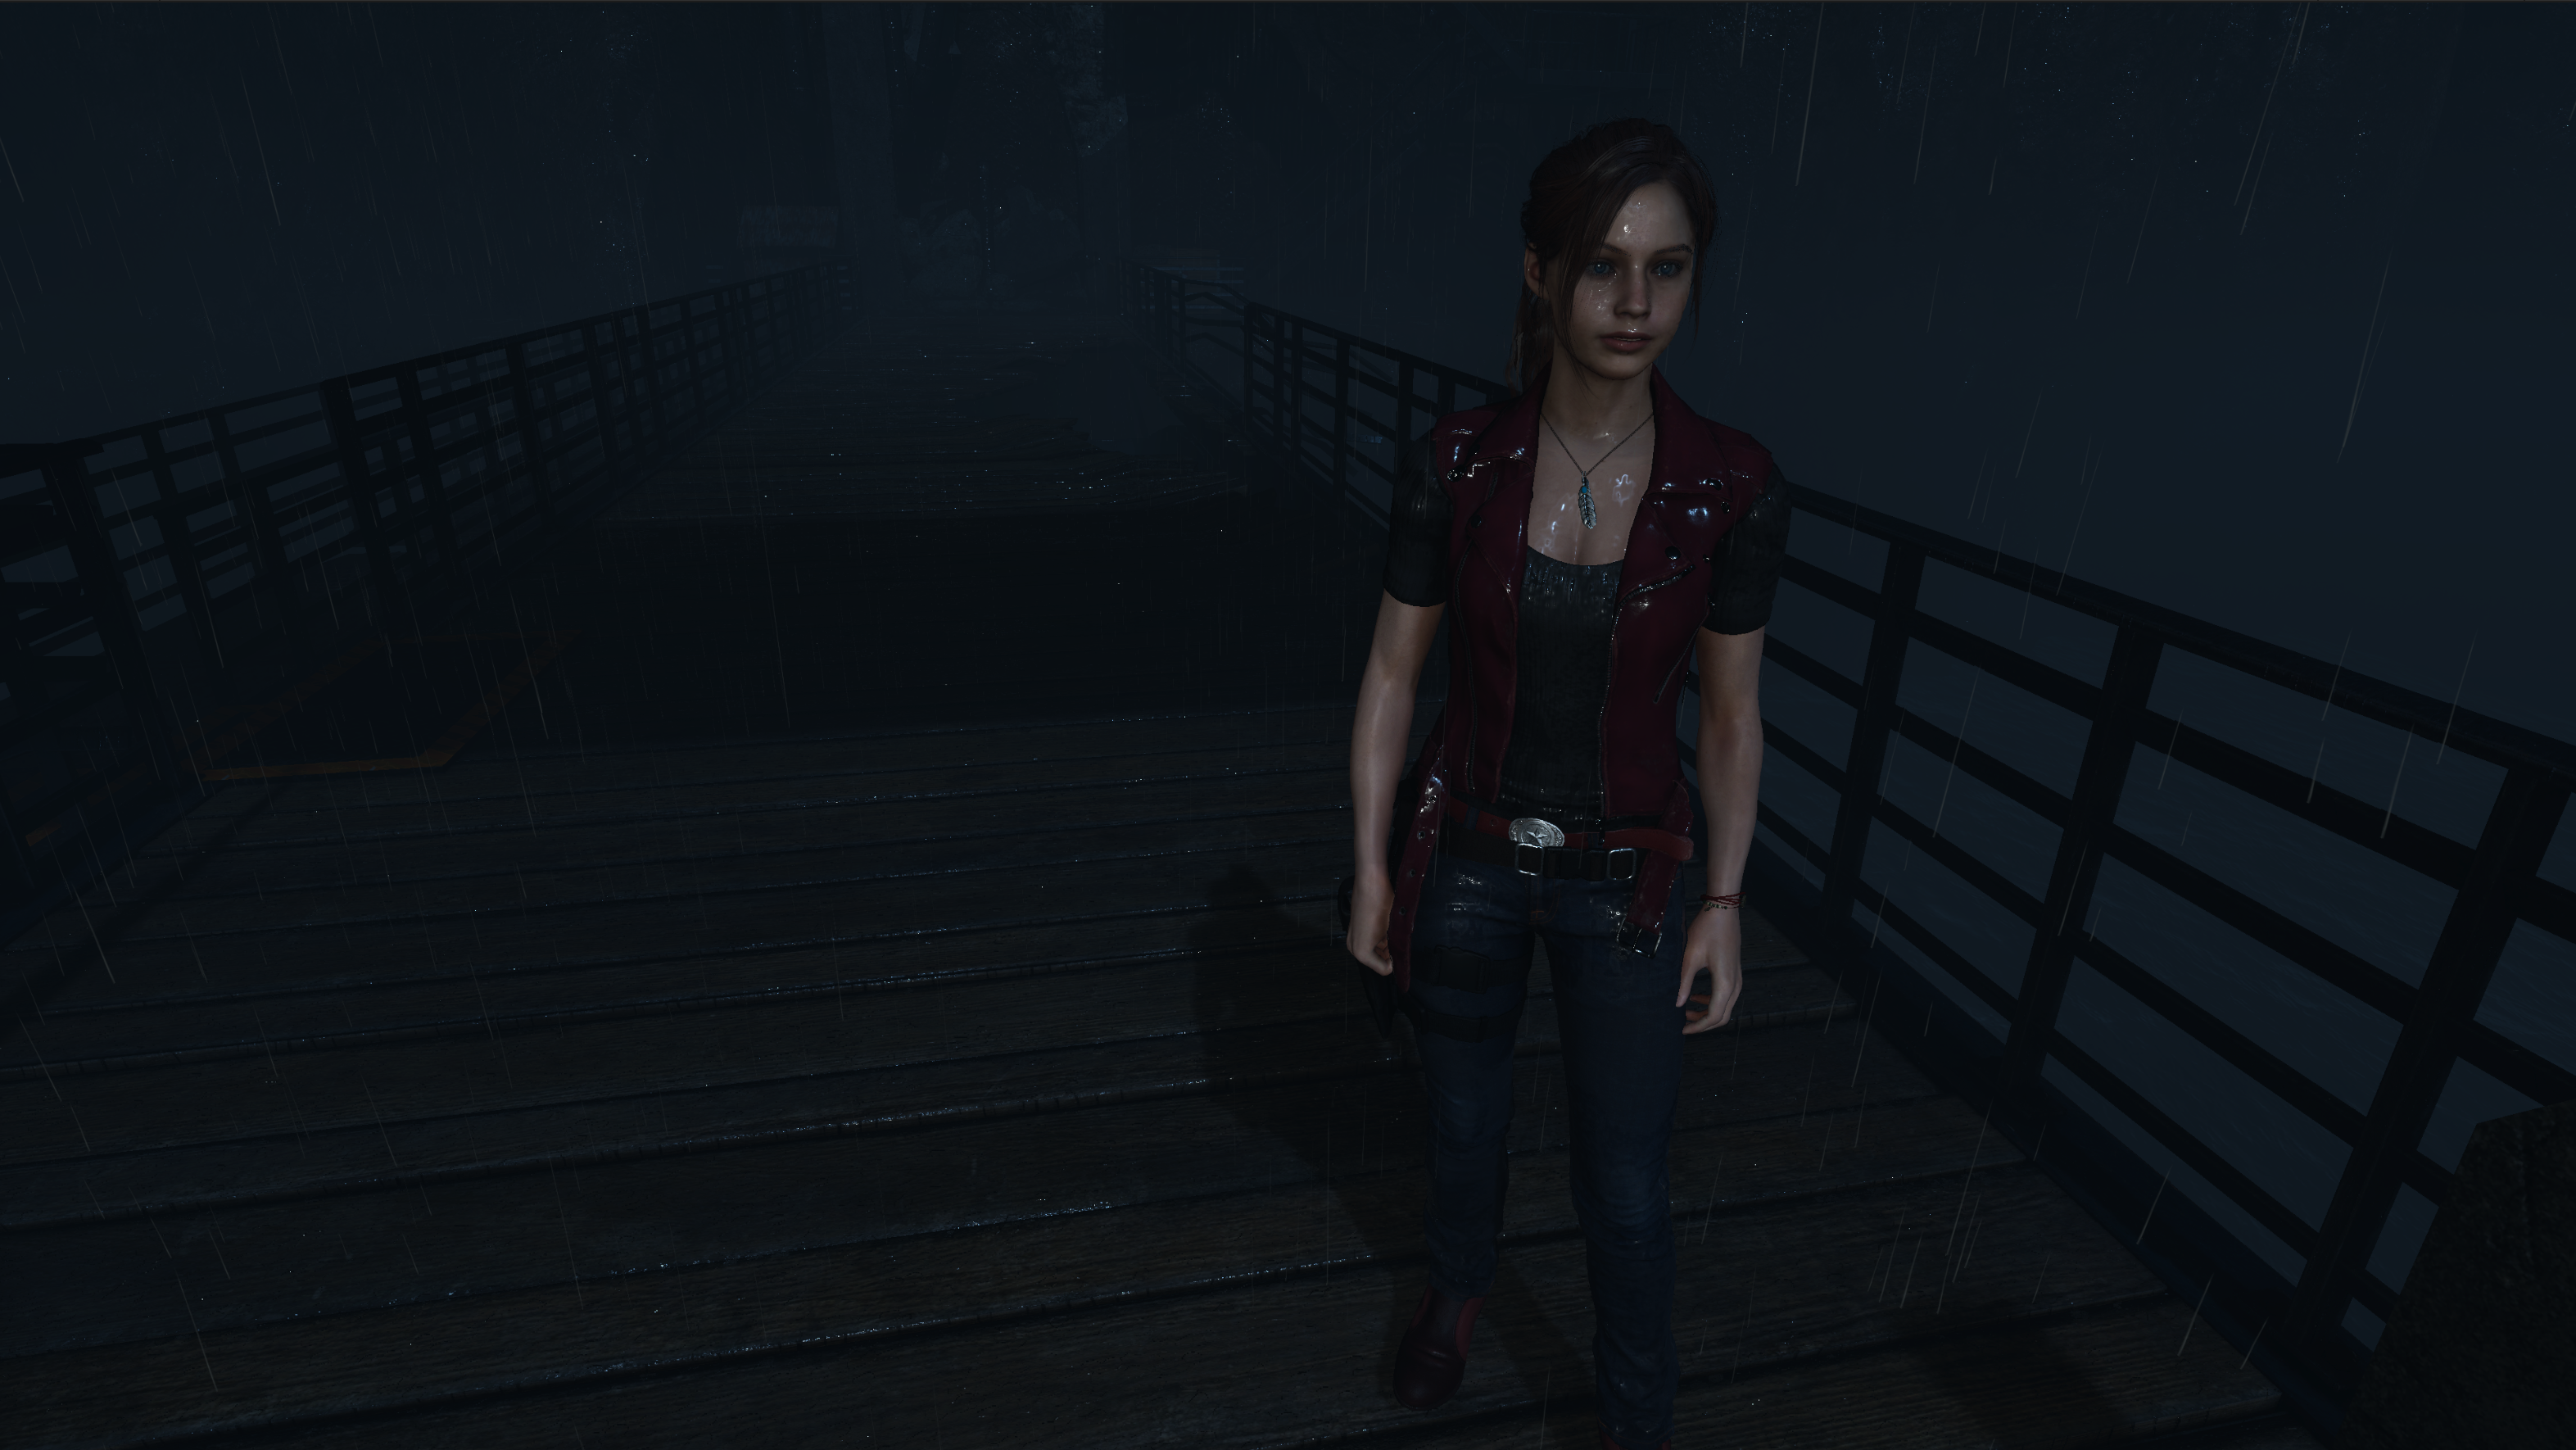 Resident Evil Code Verônica Detonado (01) Claire Redfield 